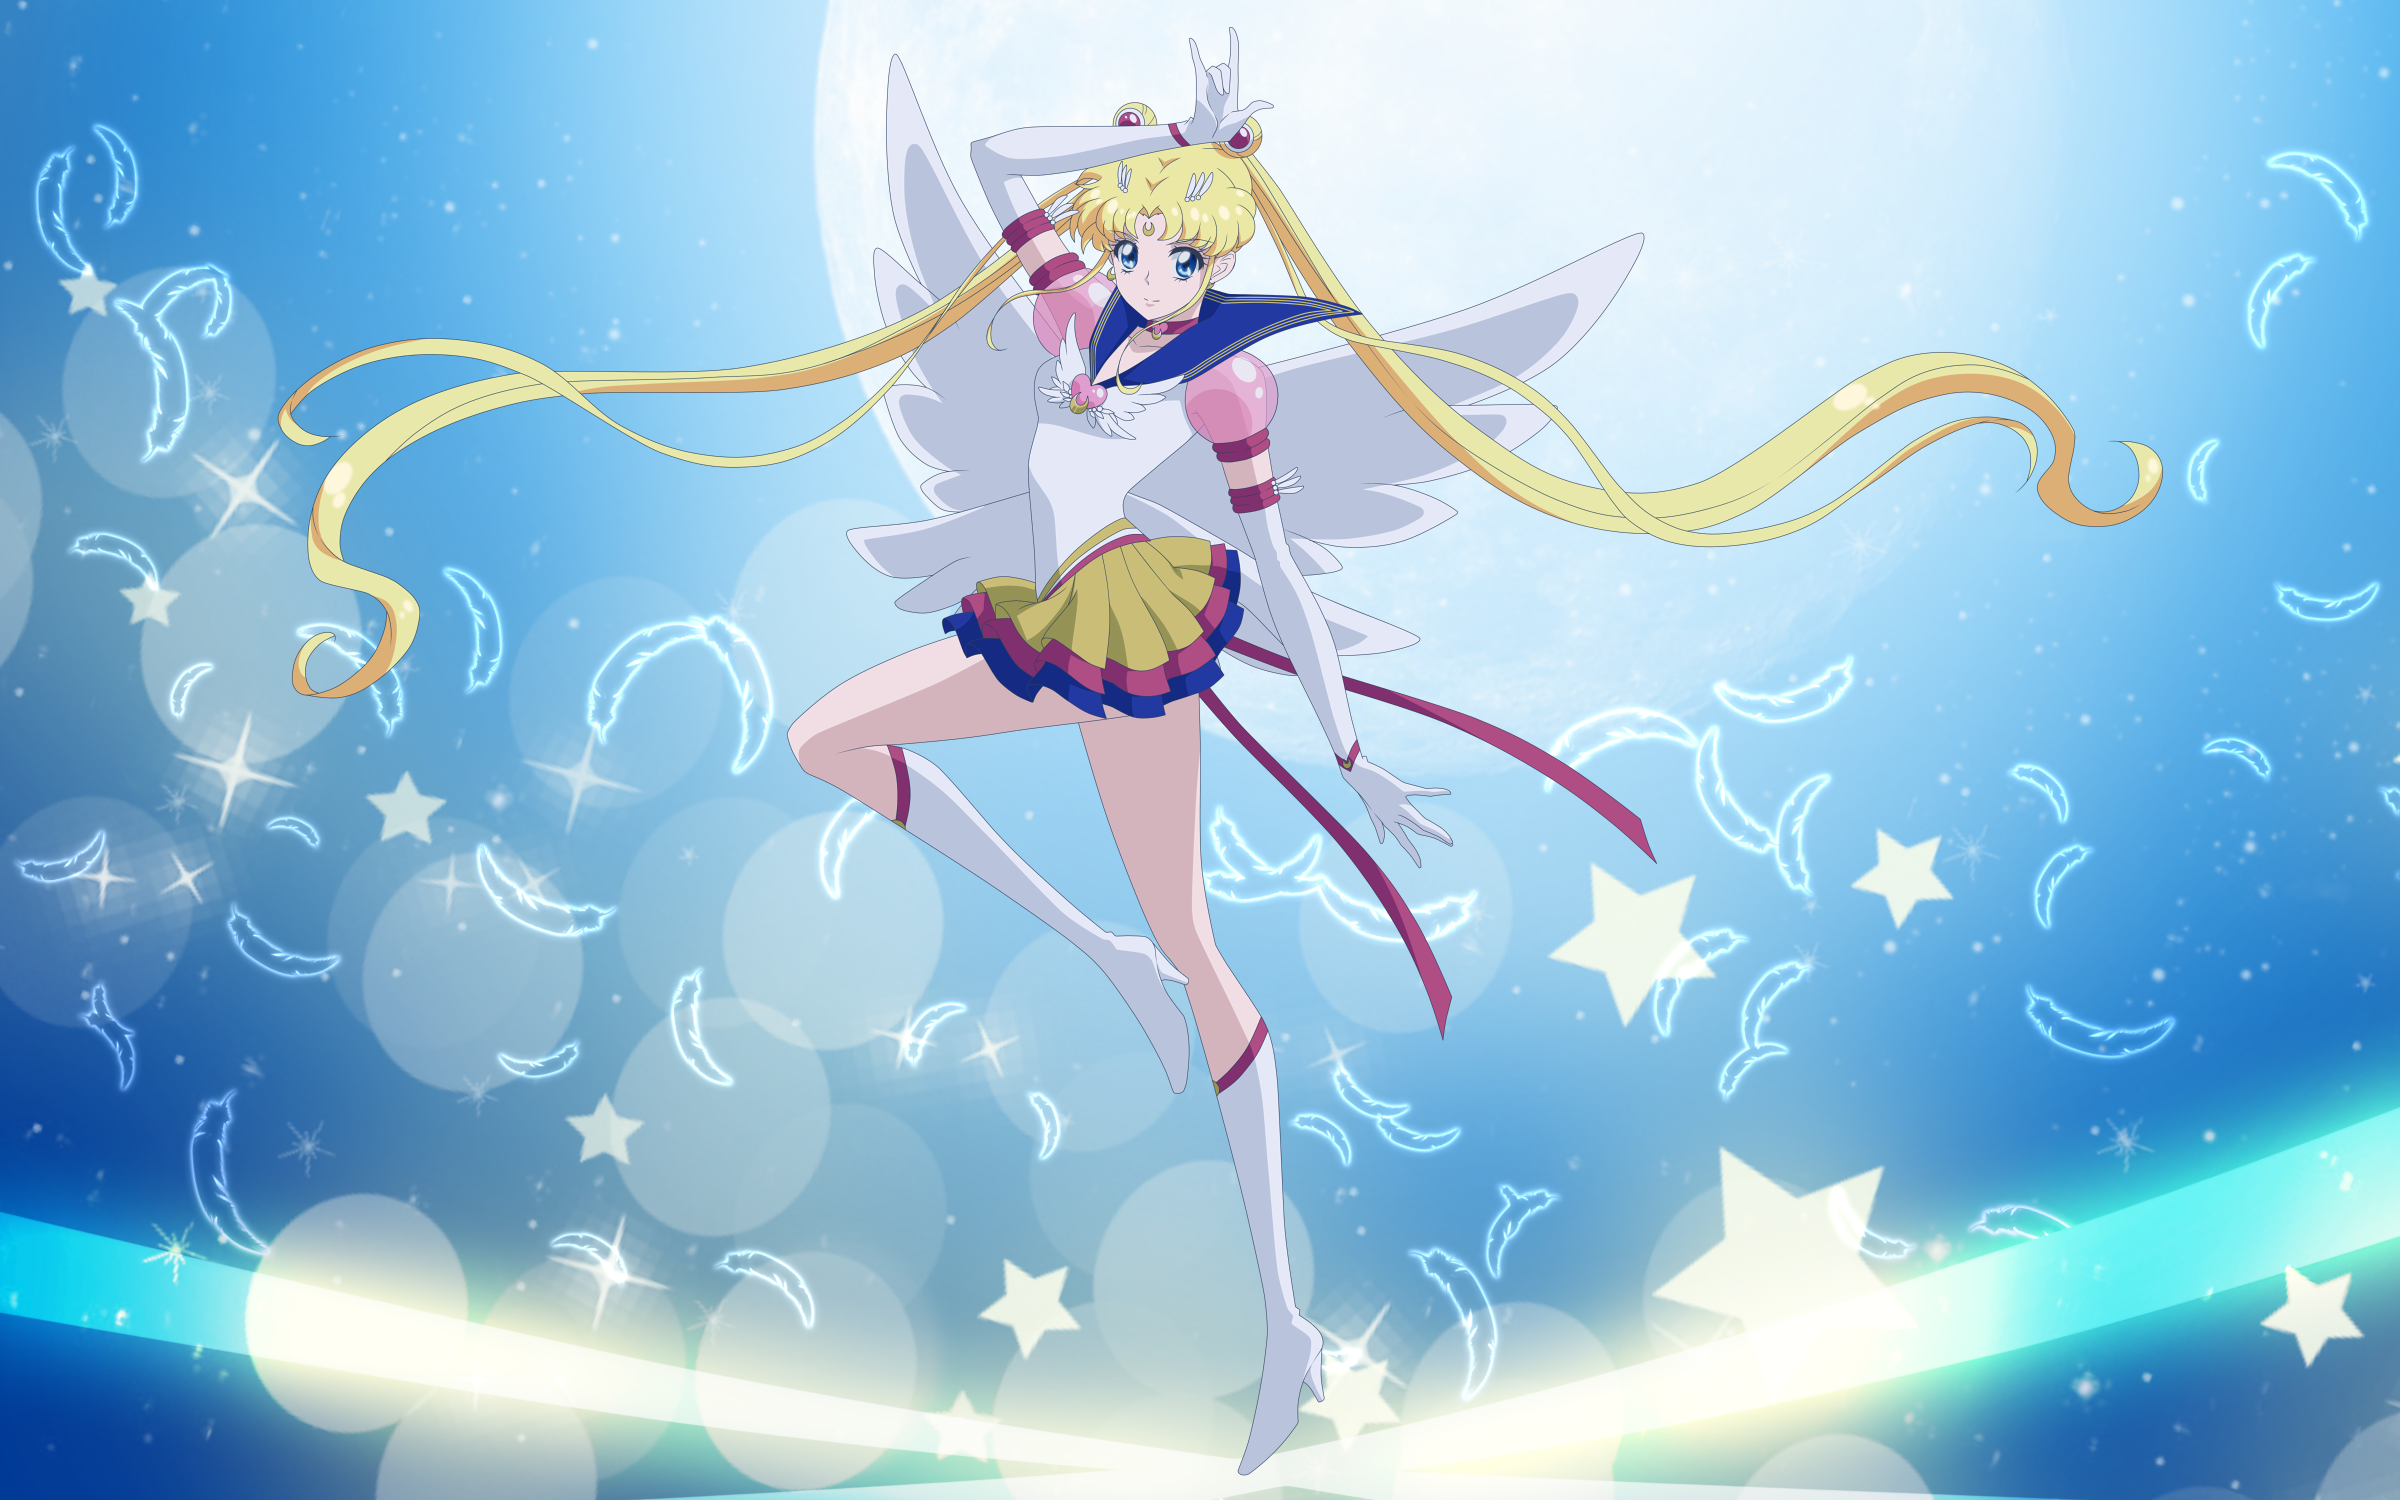 Eternal Sailor Moon Crystal by Bloom2 on DeviantArt